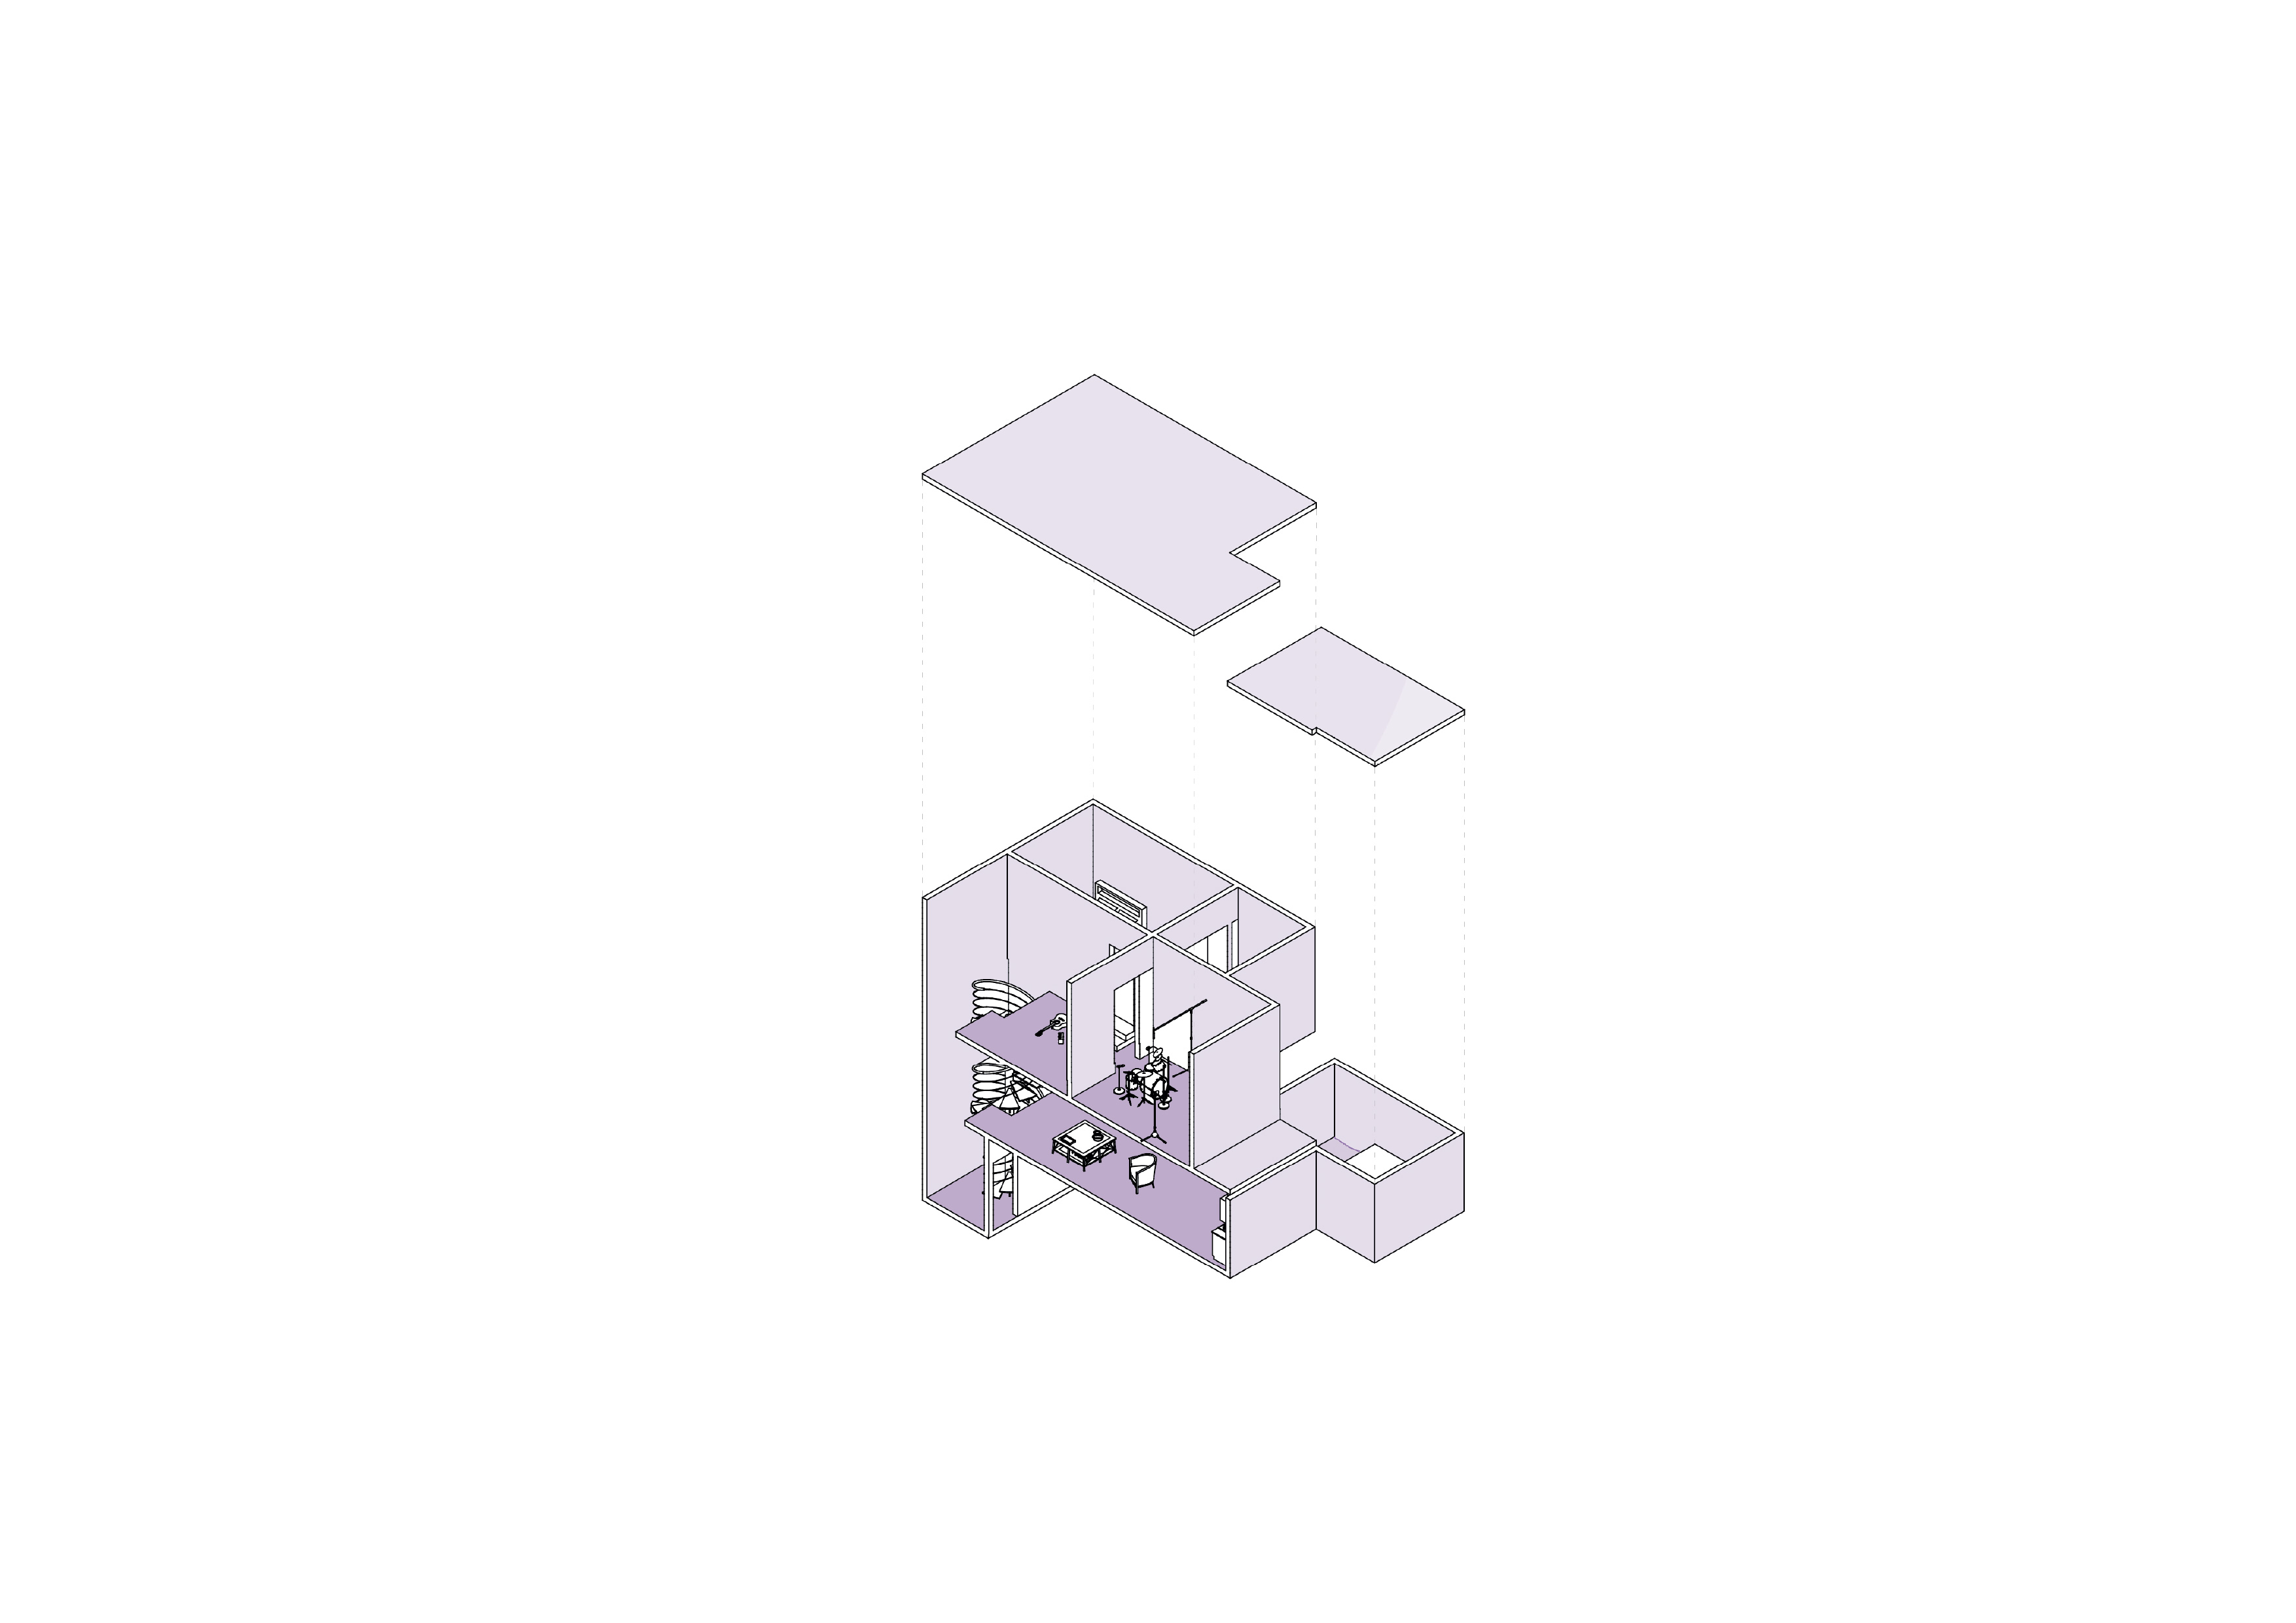 Living in a Rubik’s Cube